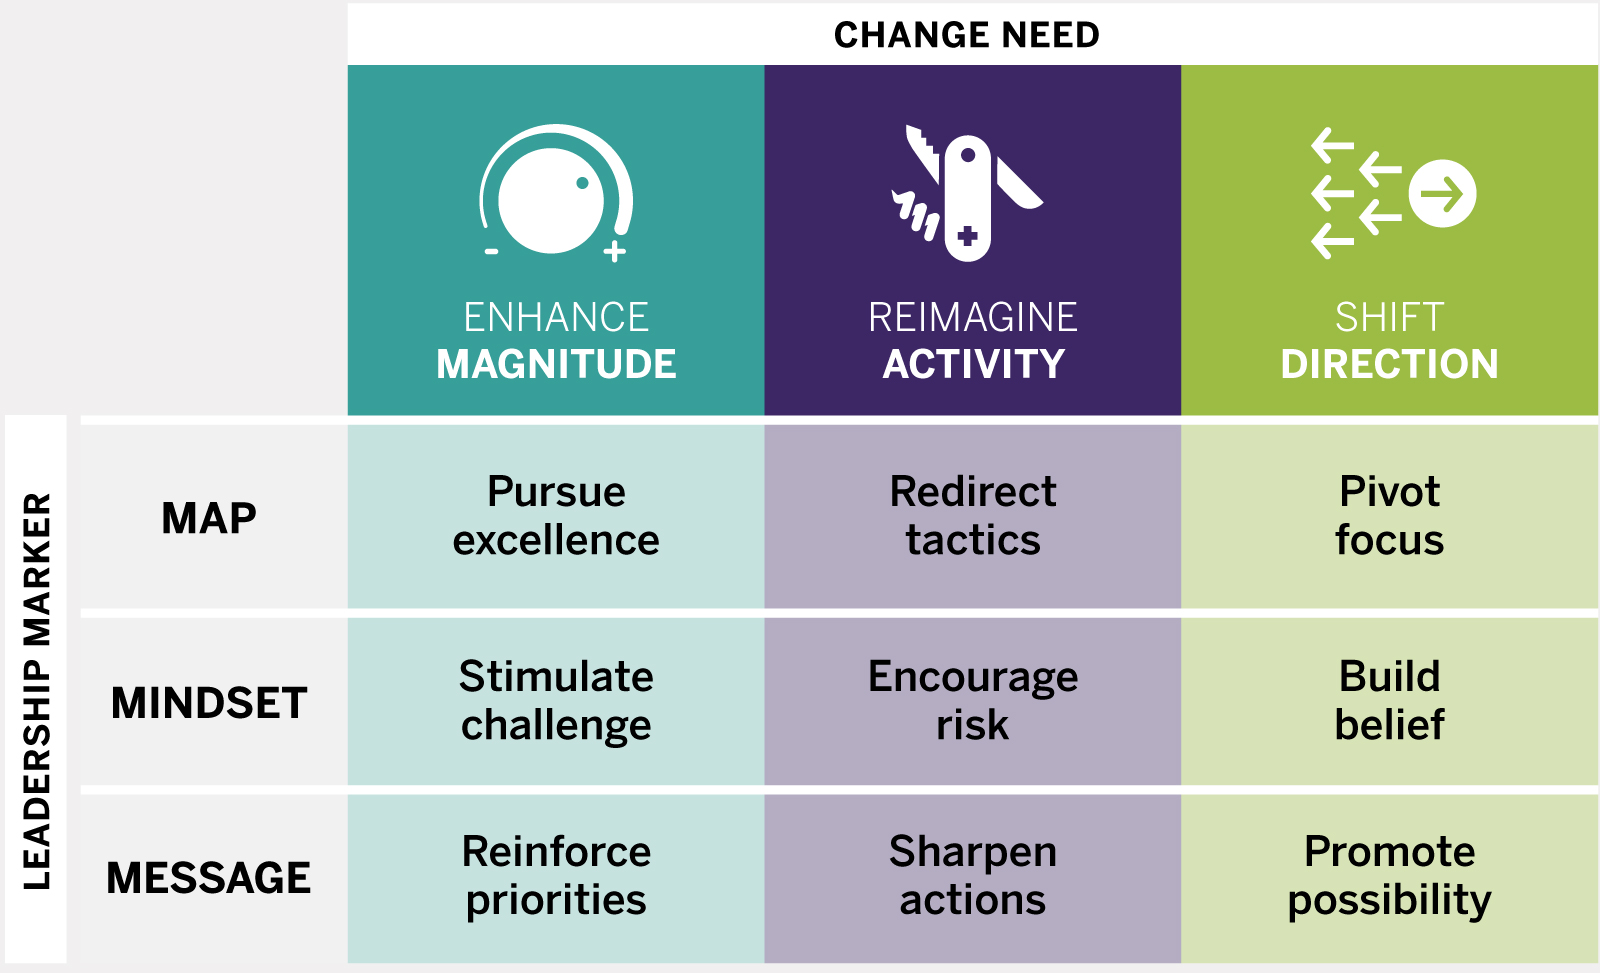 Using Change Goals to Inform Leadership